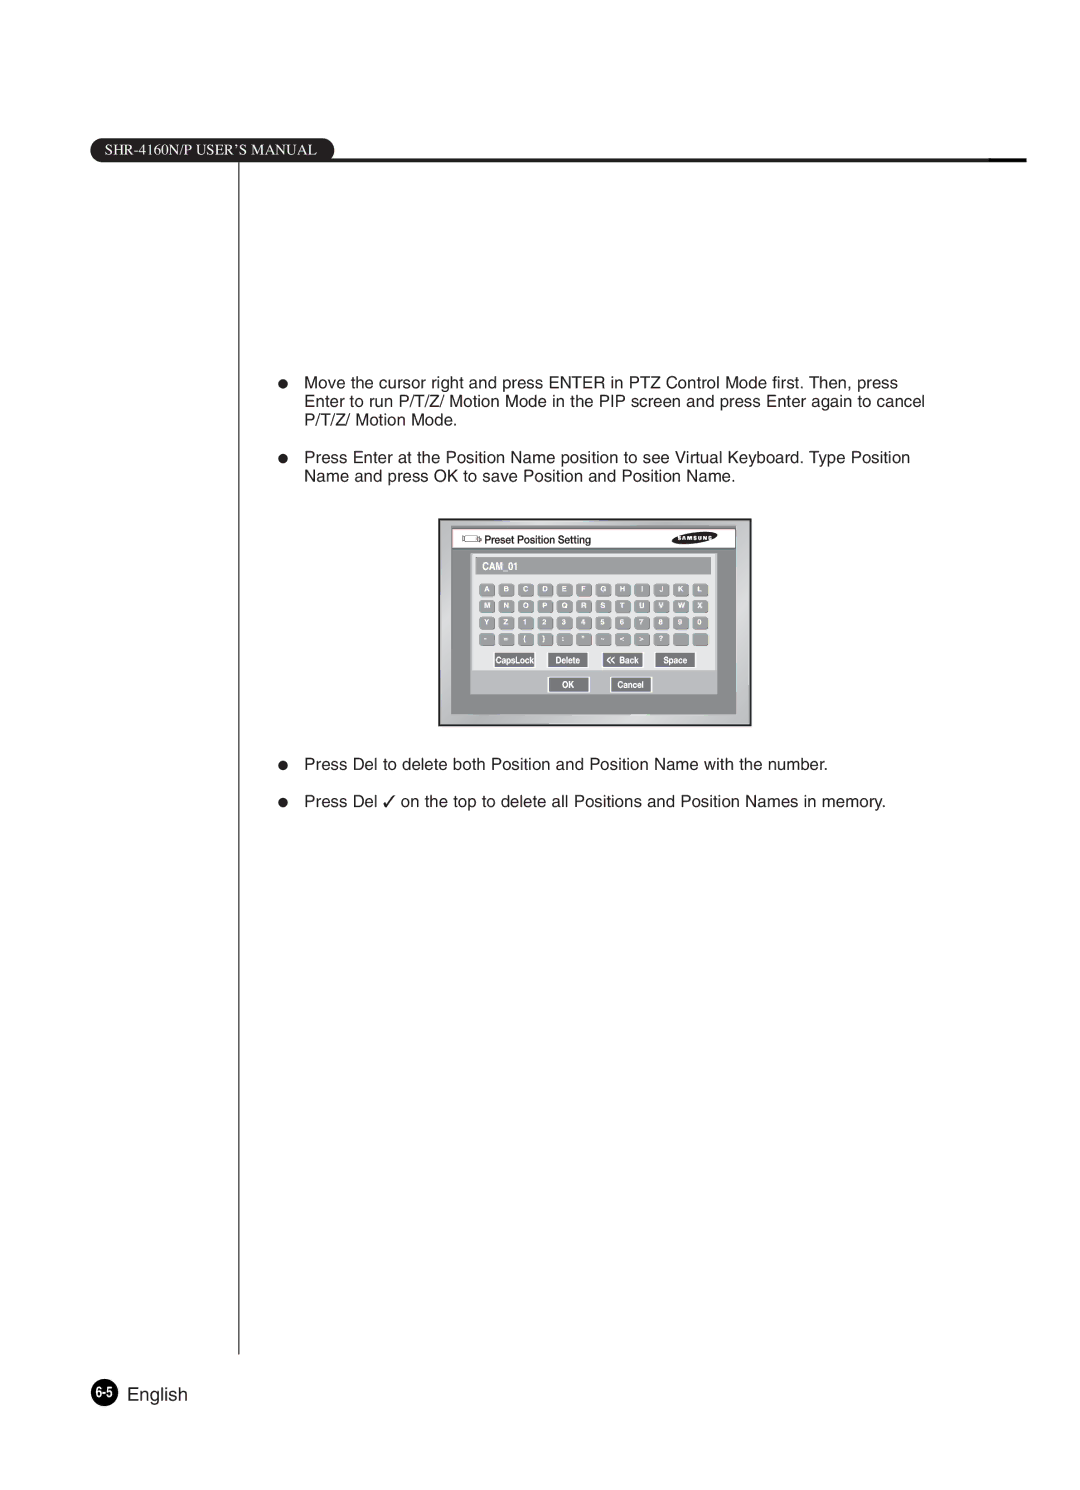 Samsung SHR-4160P manual 5English 